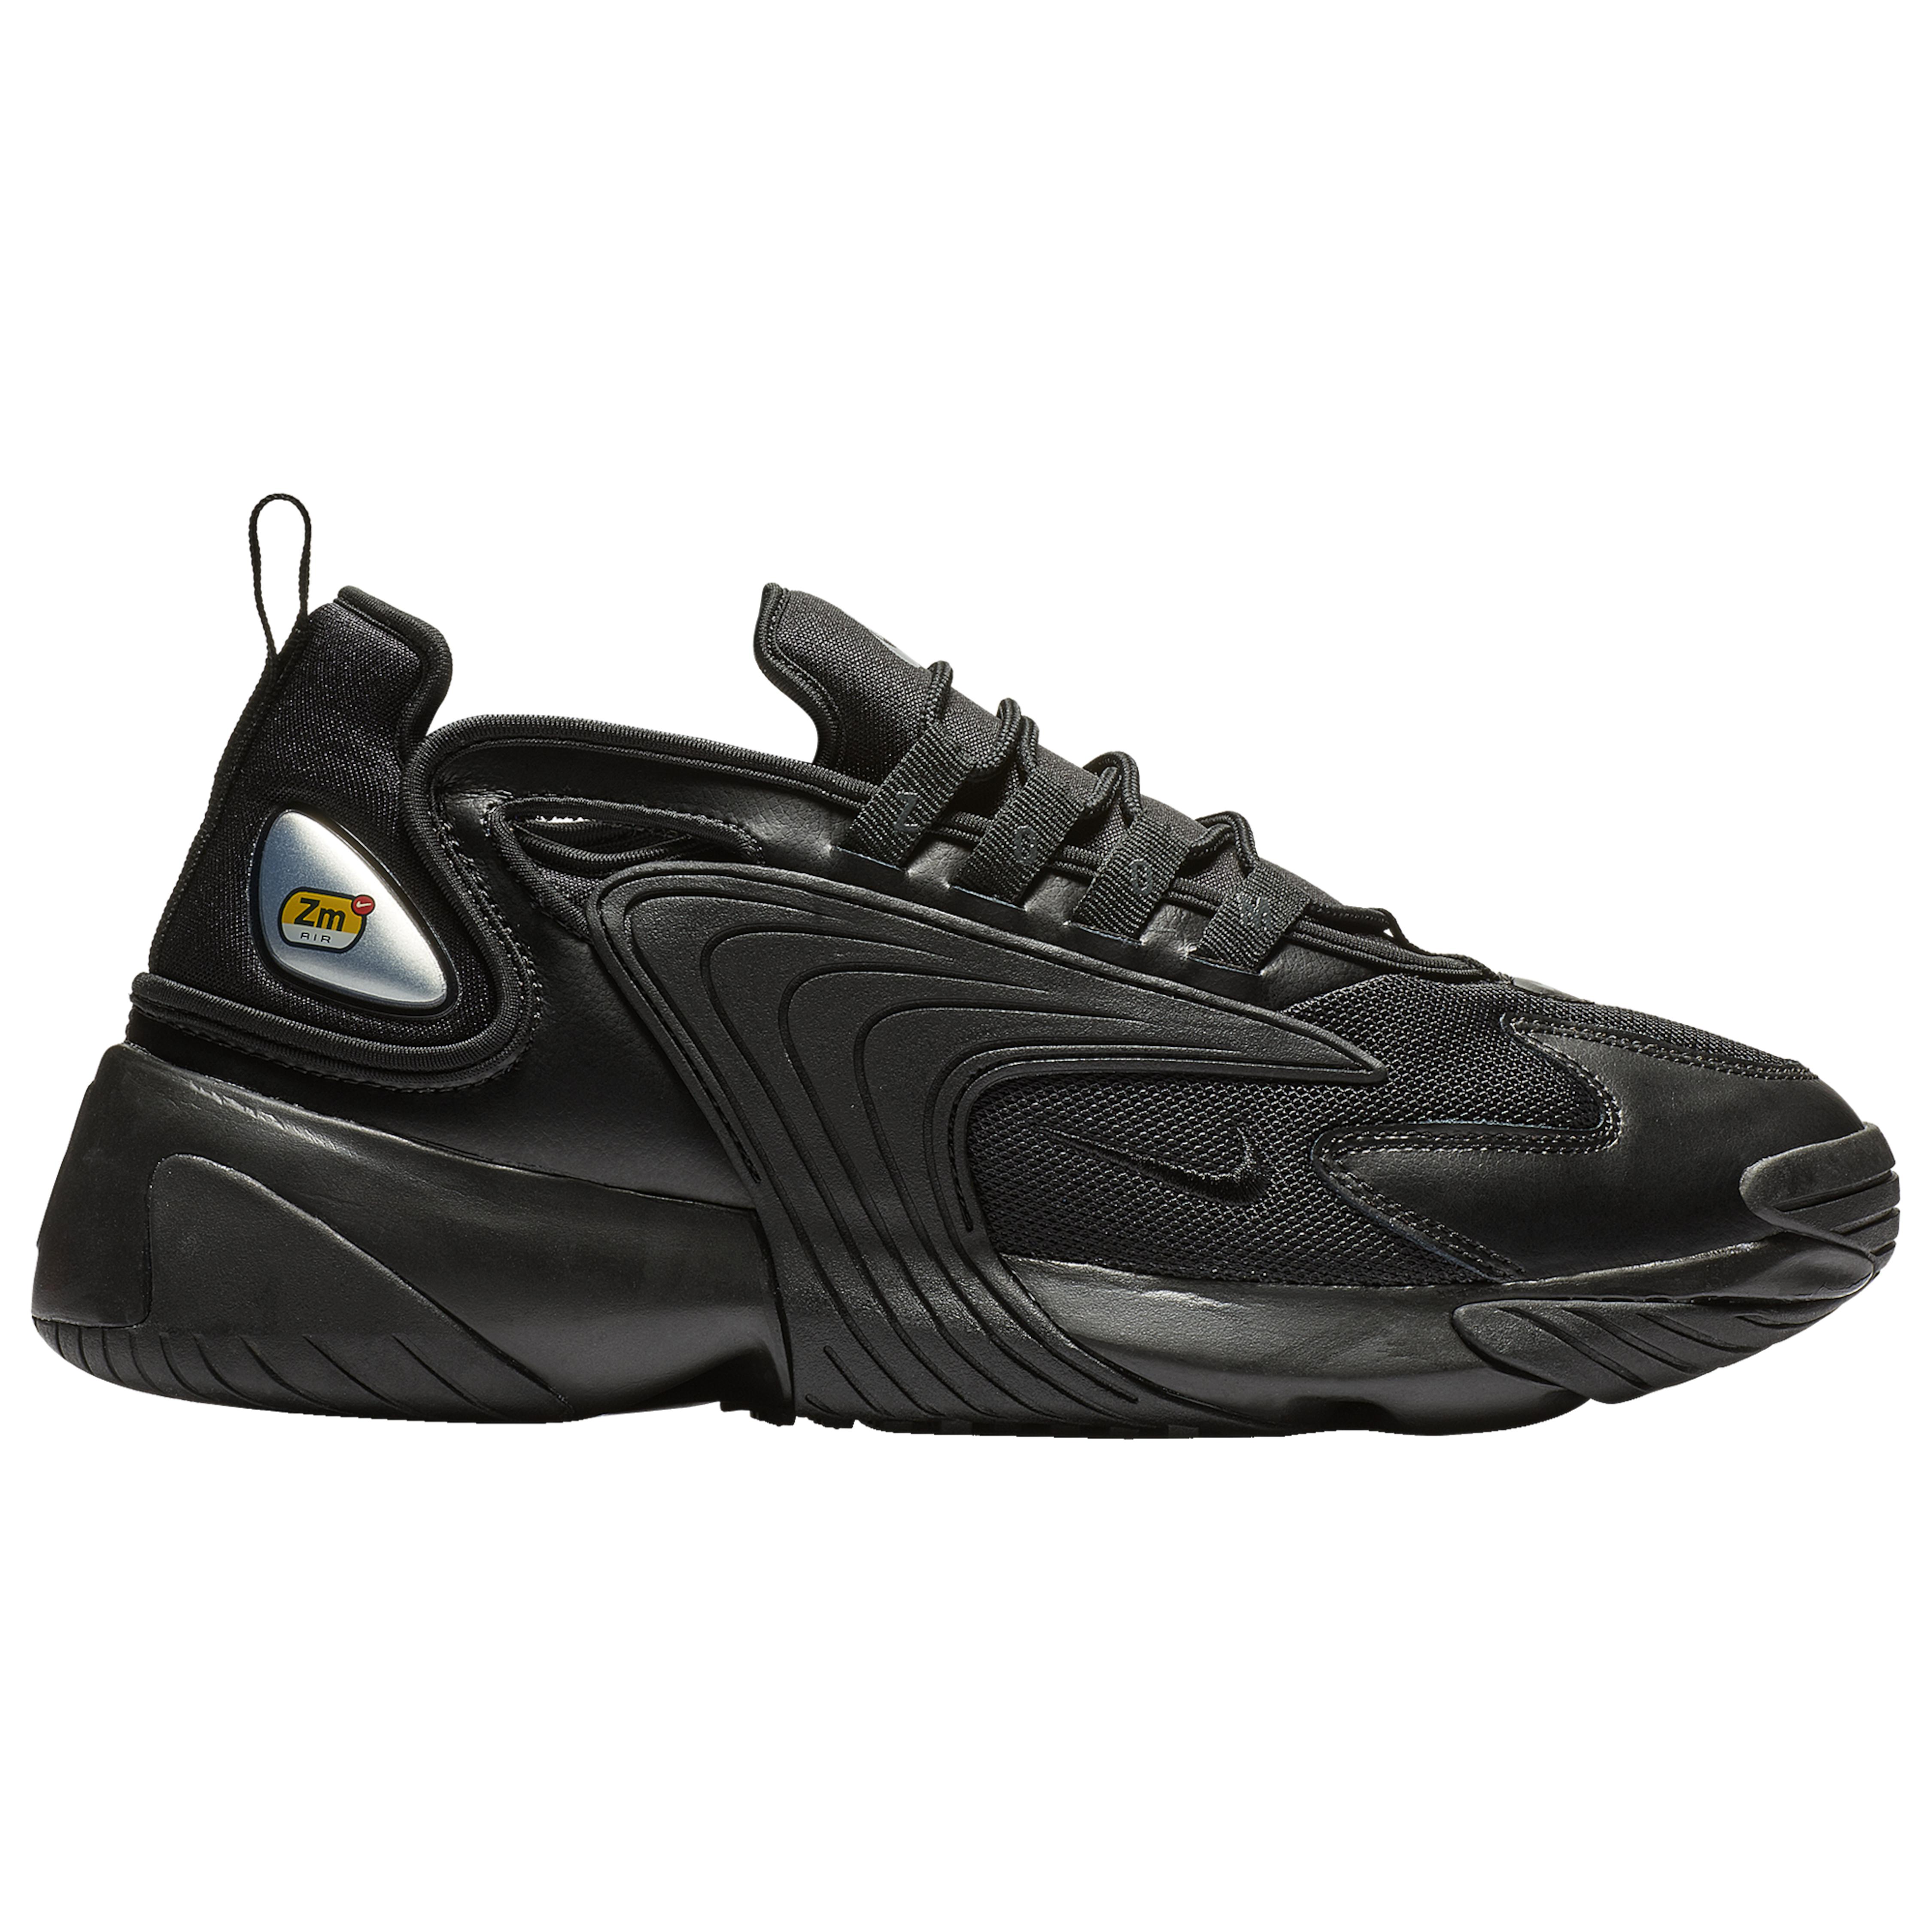 Nike Zoom 2k Shoe in Black/Black/Anthracite (Black) for Men - Lyst